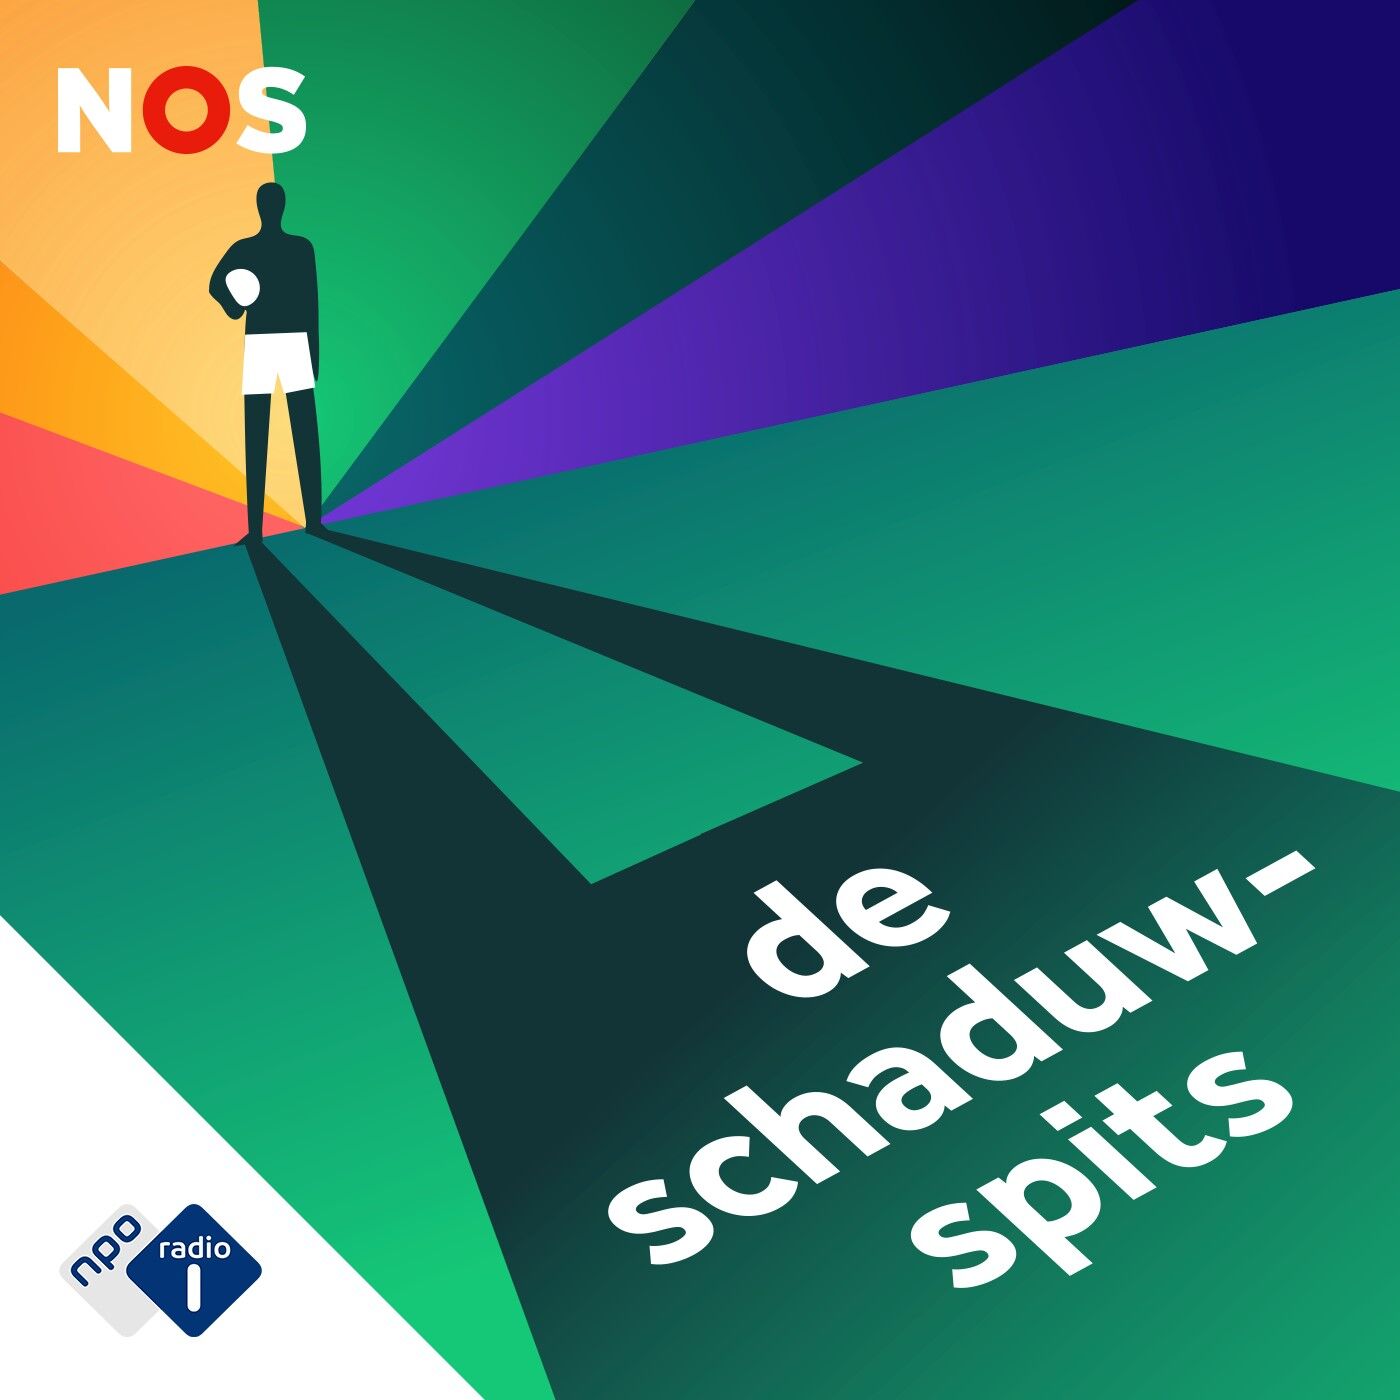 De Schaduwspits podcast show image